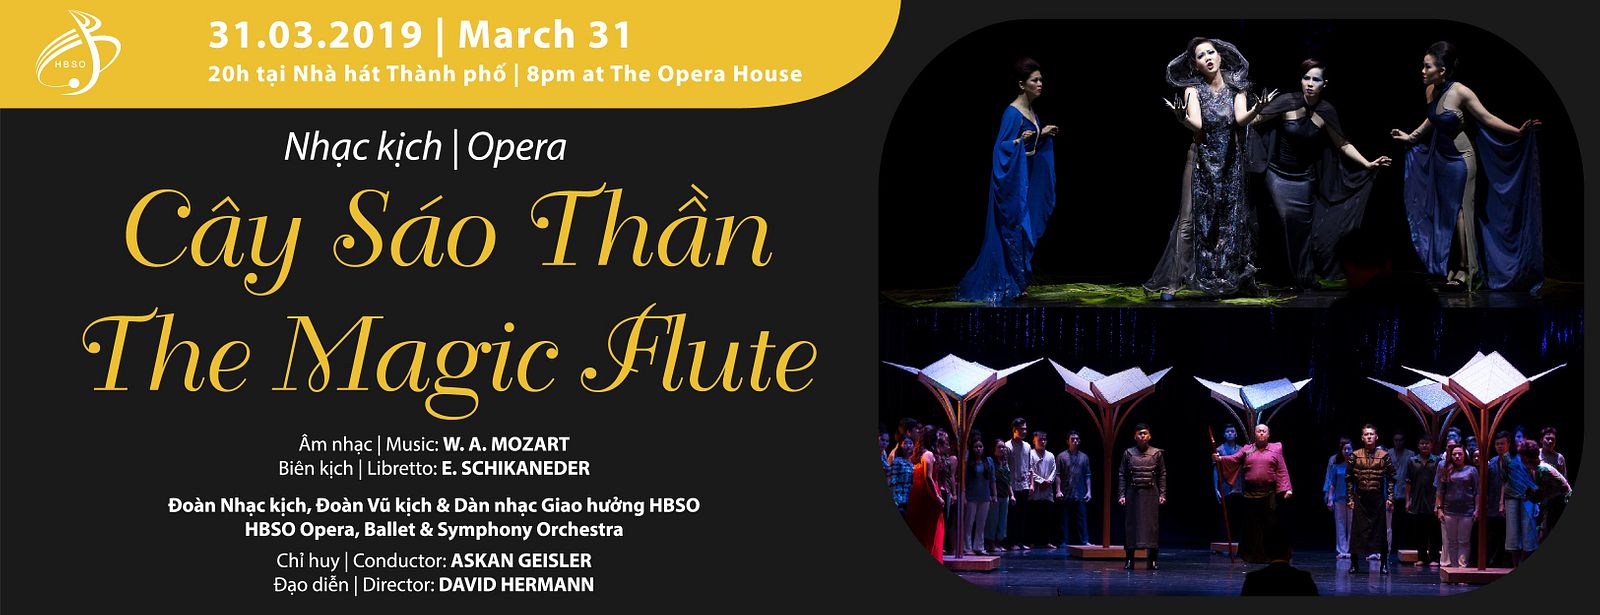 magic flute detroit opera house